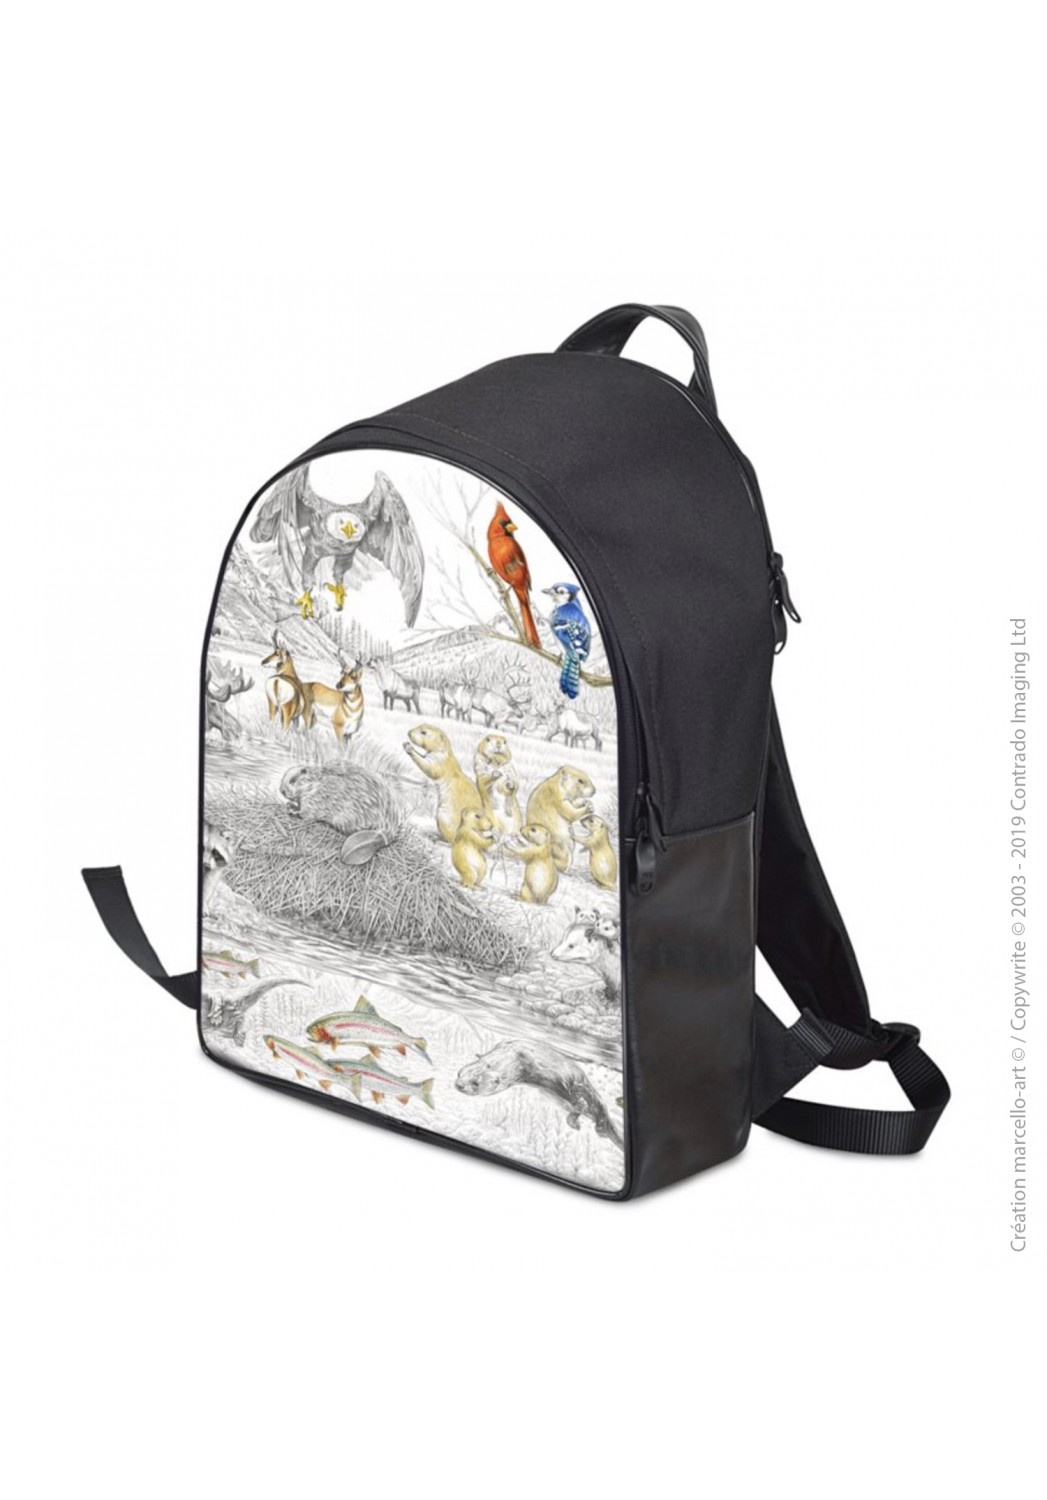 Marcello-art: Fashion accessory Backpack 393 american fauna